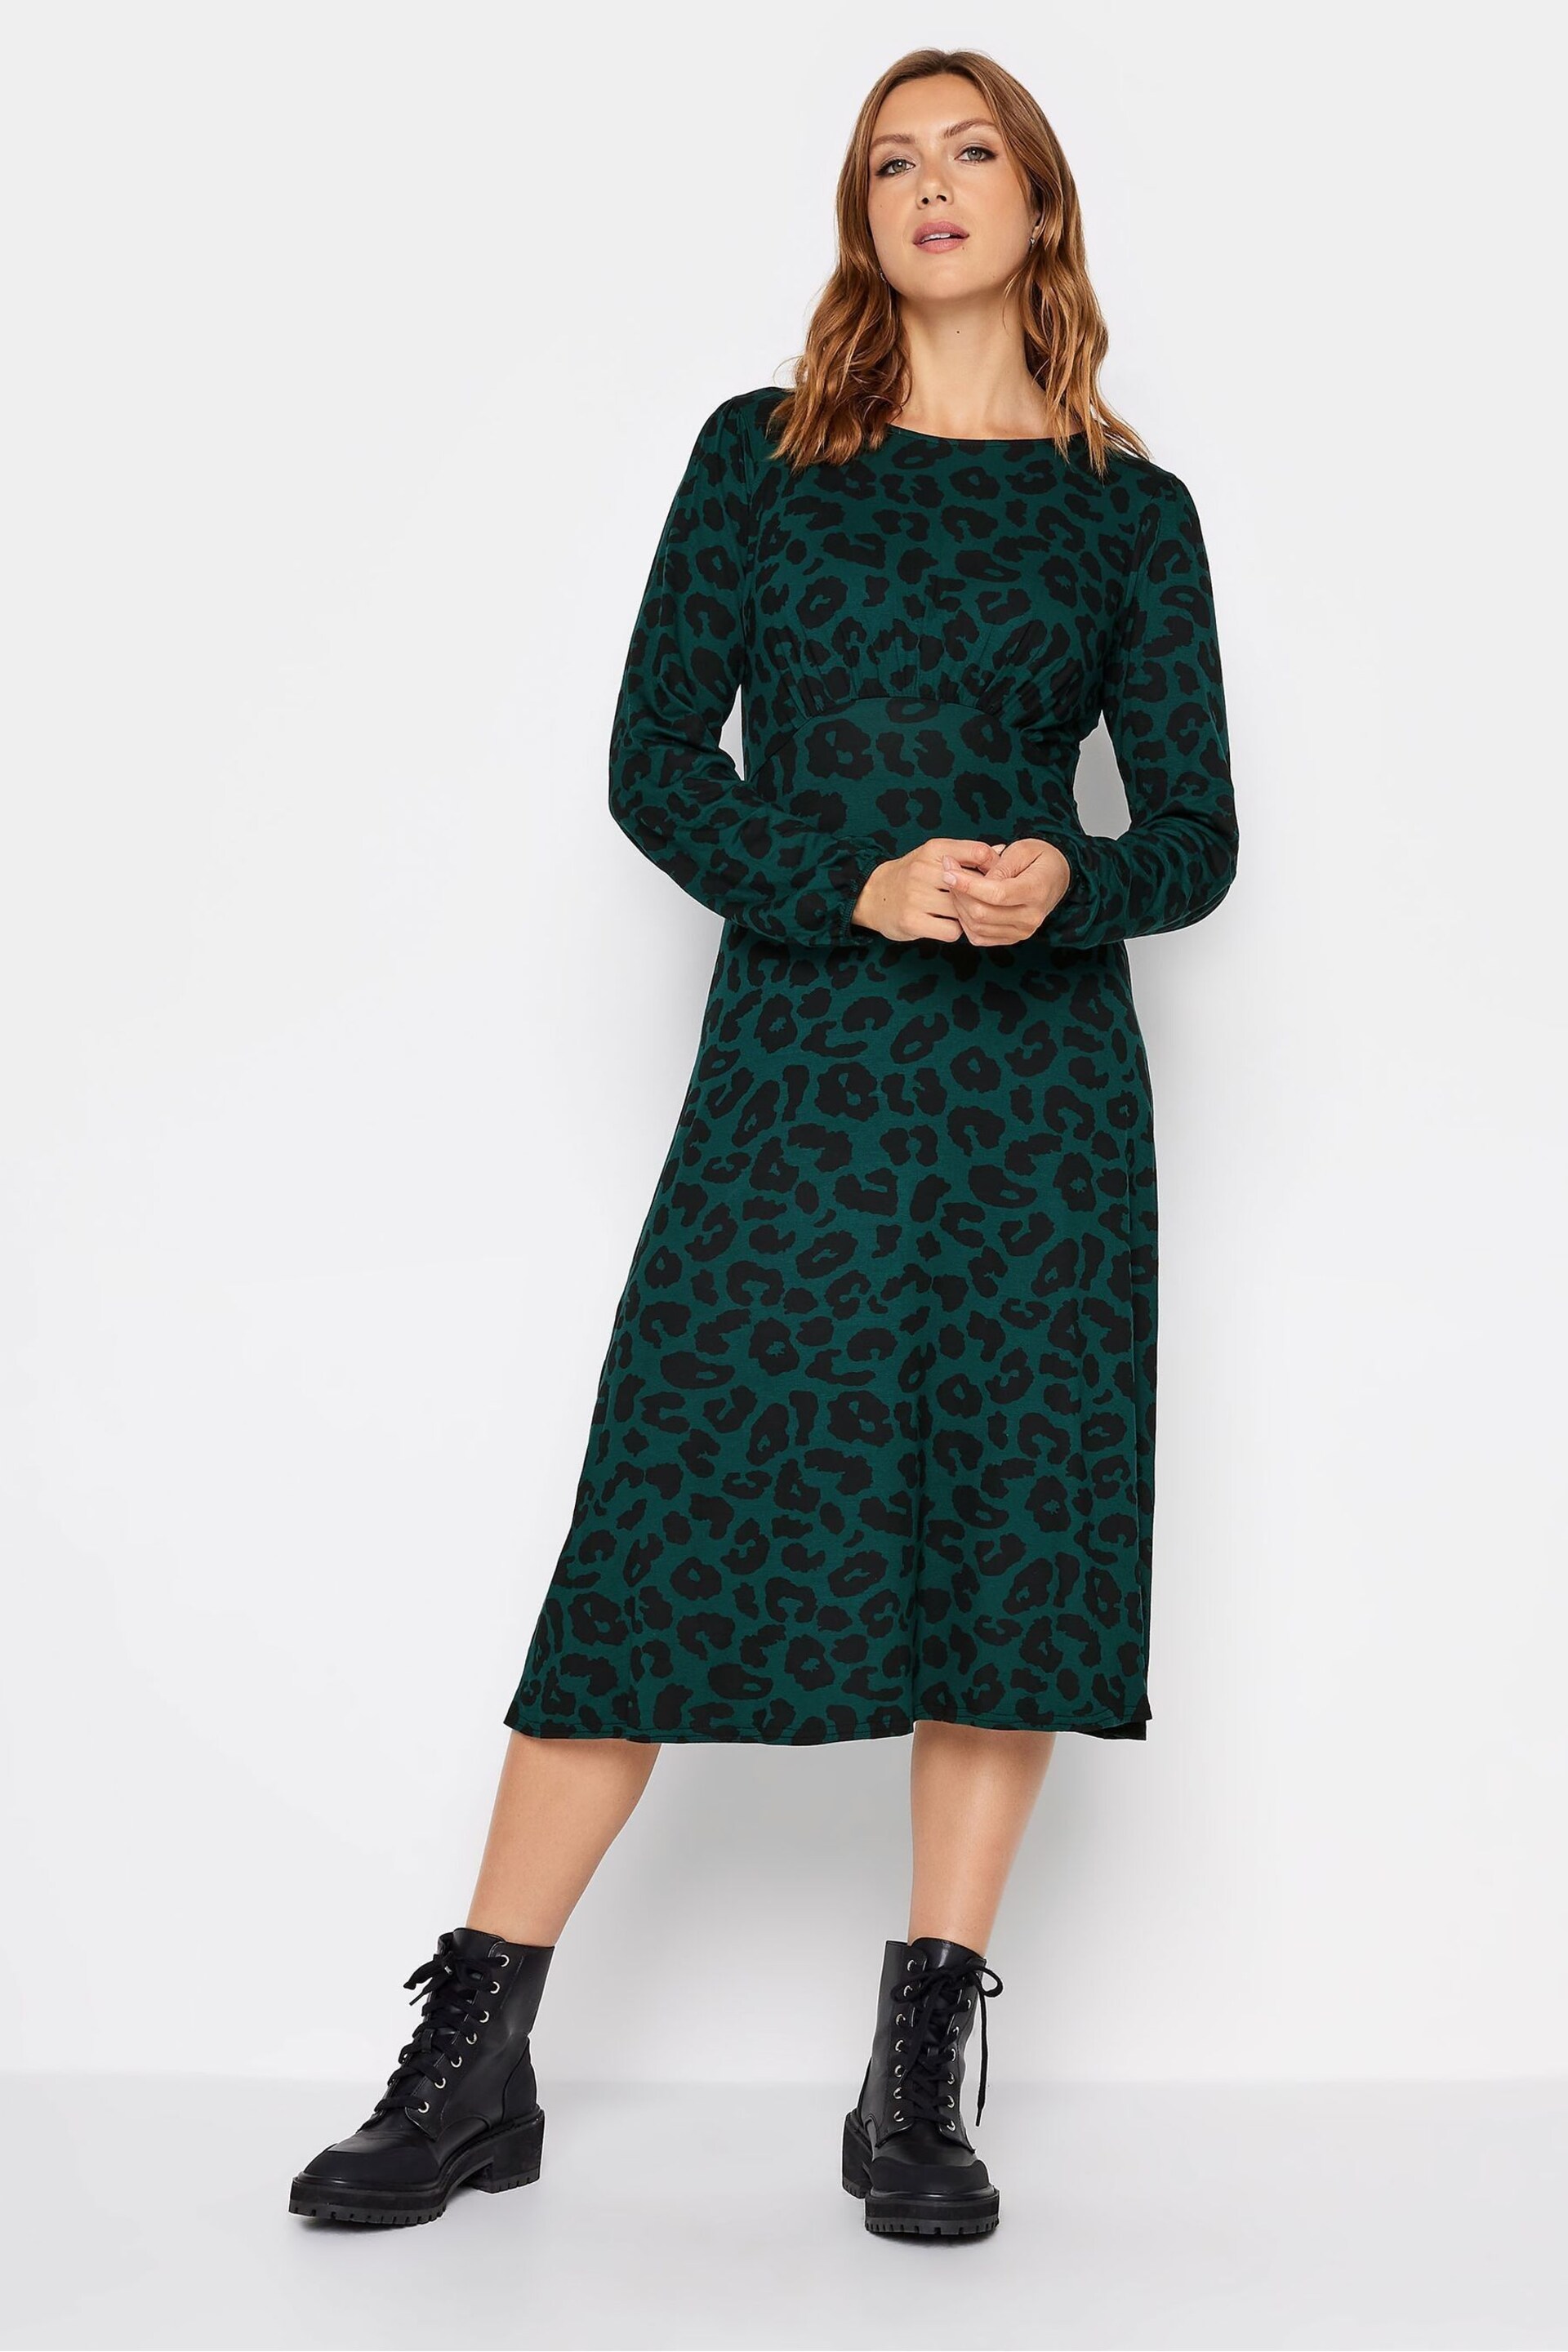 Long Tall Sally Green Long Sleeve Tea Green Dress - Image 1 of 4